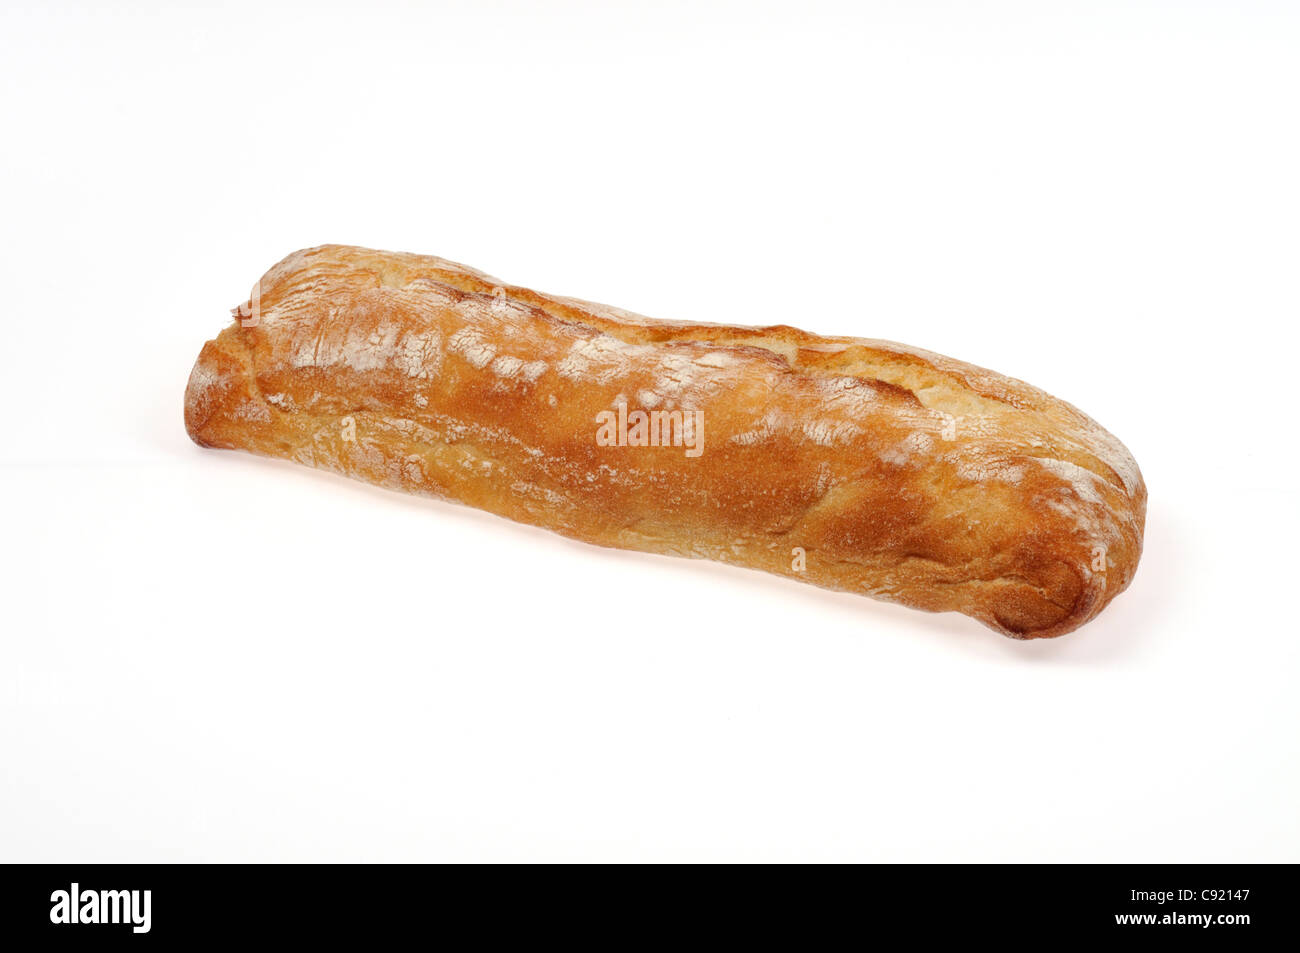 A loaf of Ciabatta italian white bread on white background cutout. Stock Photo